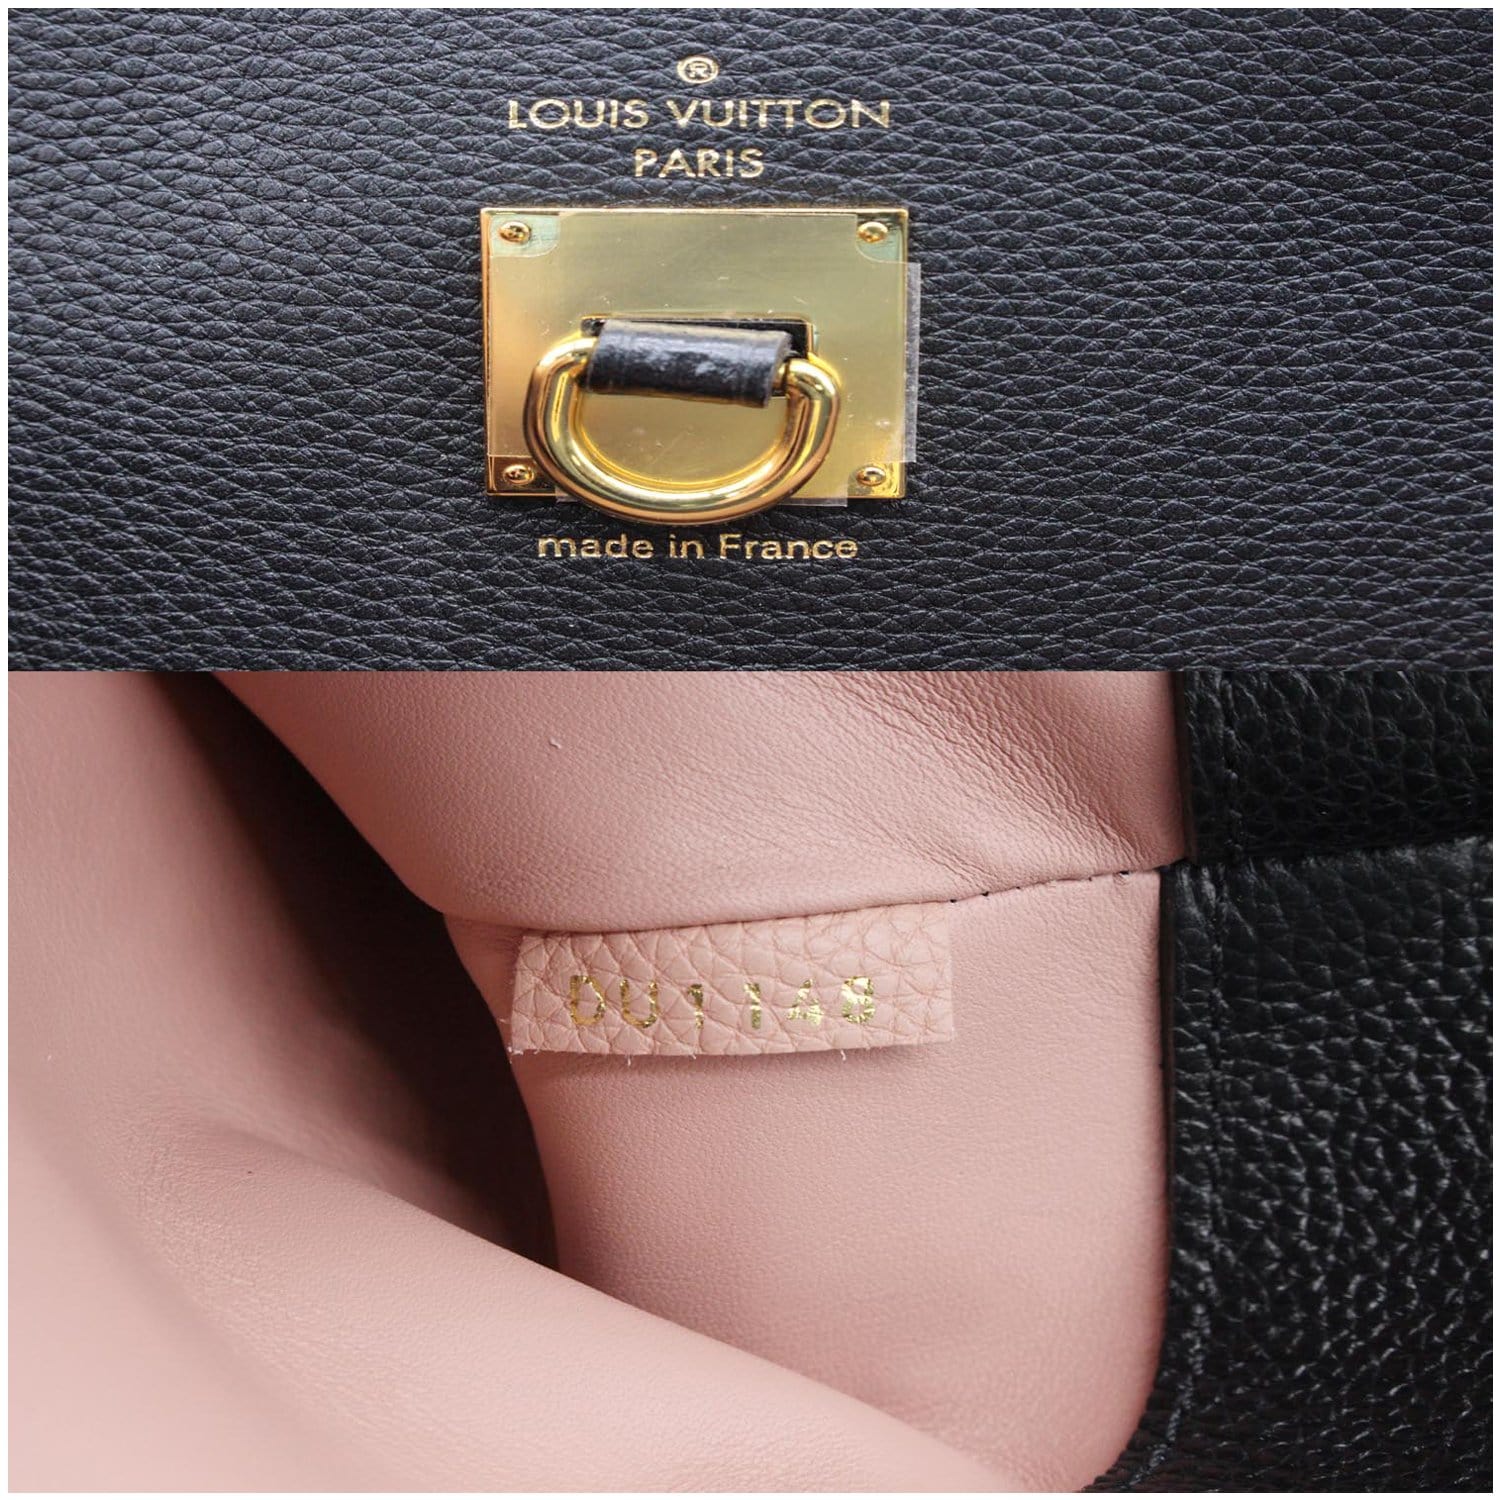 Louis Vuitton Black Leather City Steamer mm Bag